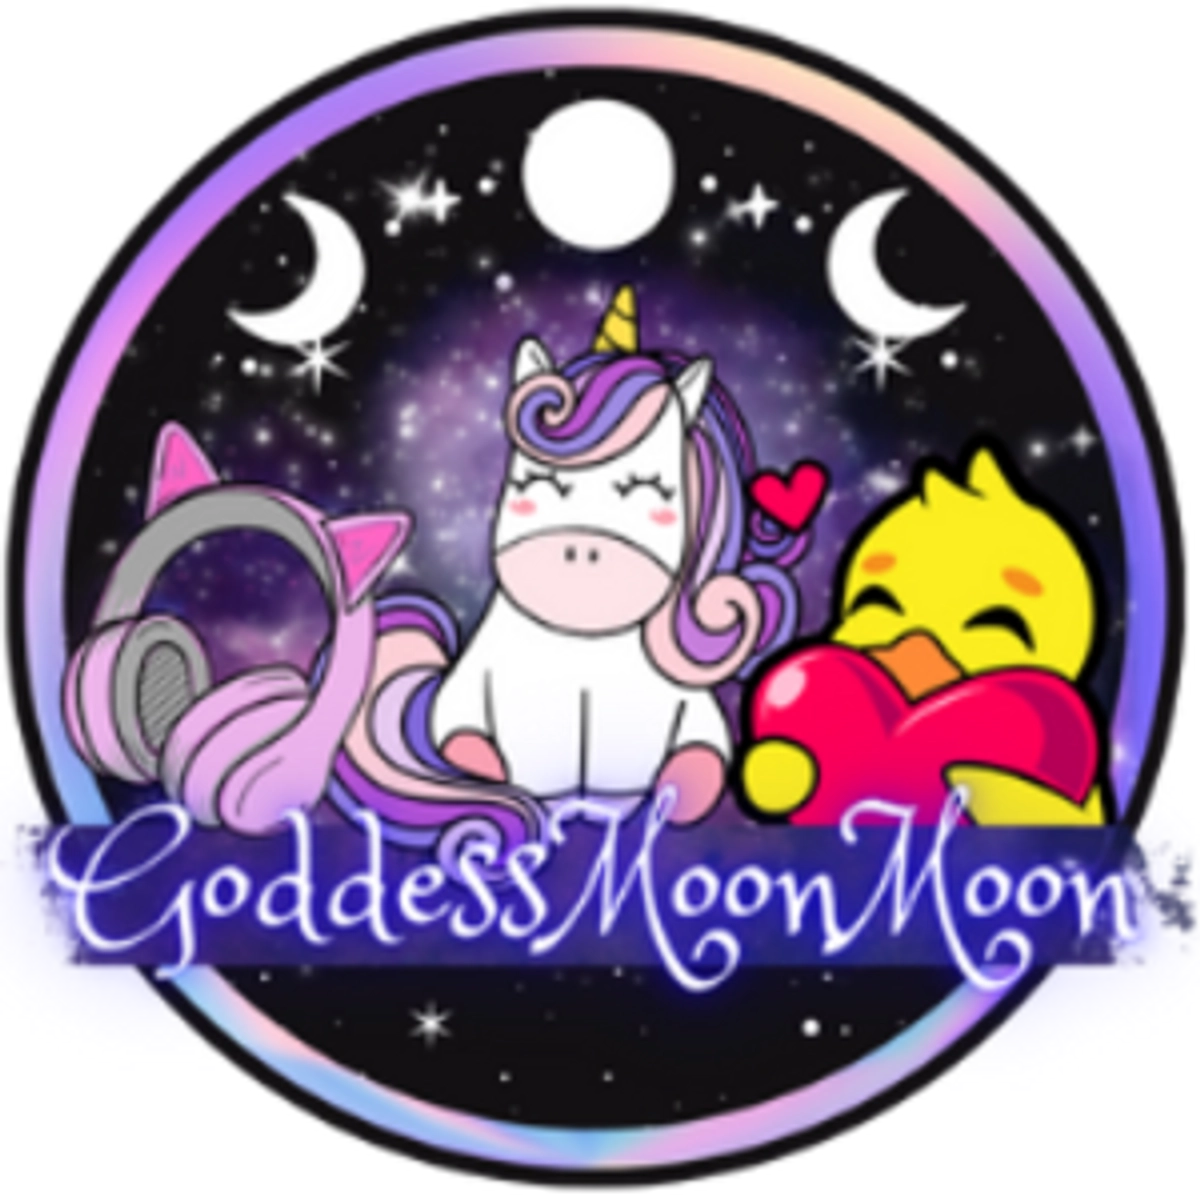 GoddessMoonMoon